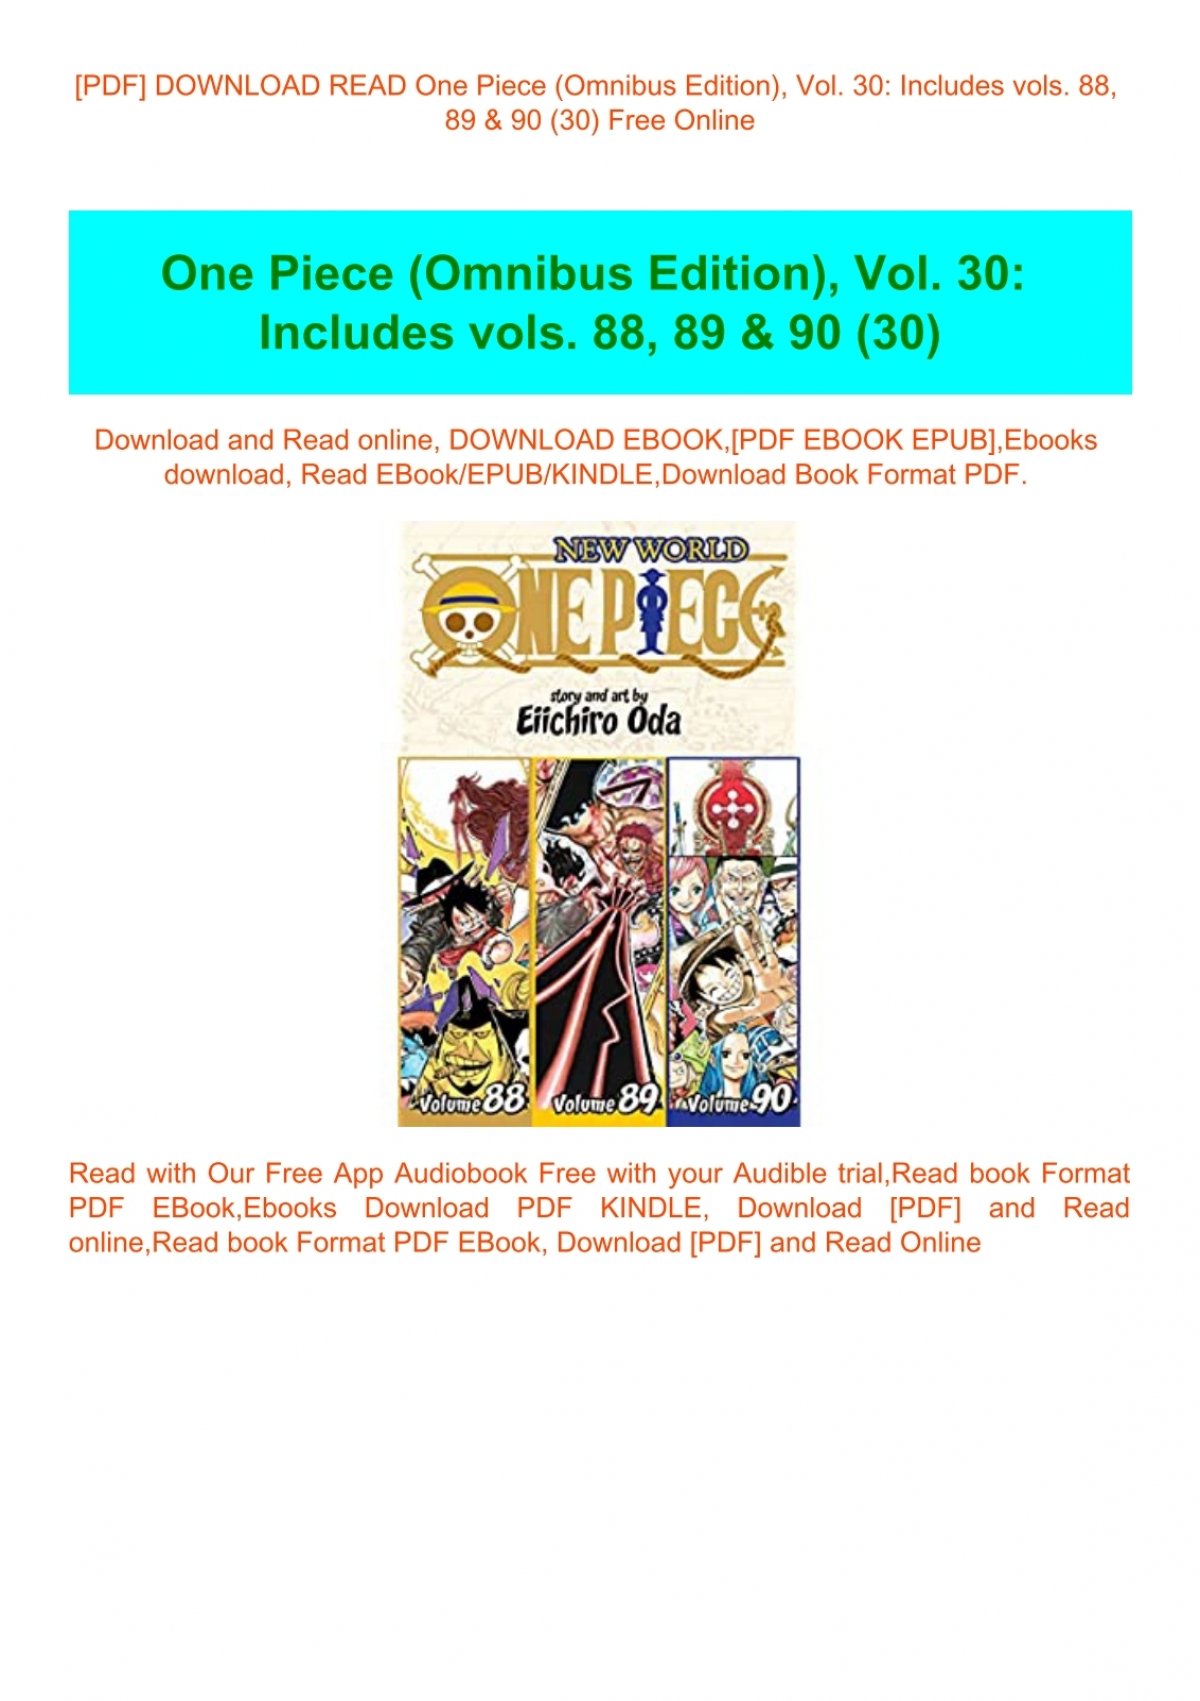 Pdf Download Read One Piece Omnibus Edition Vol 30 Includes Vols Amp Amp Amp 90 30 Free Online